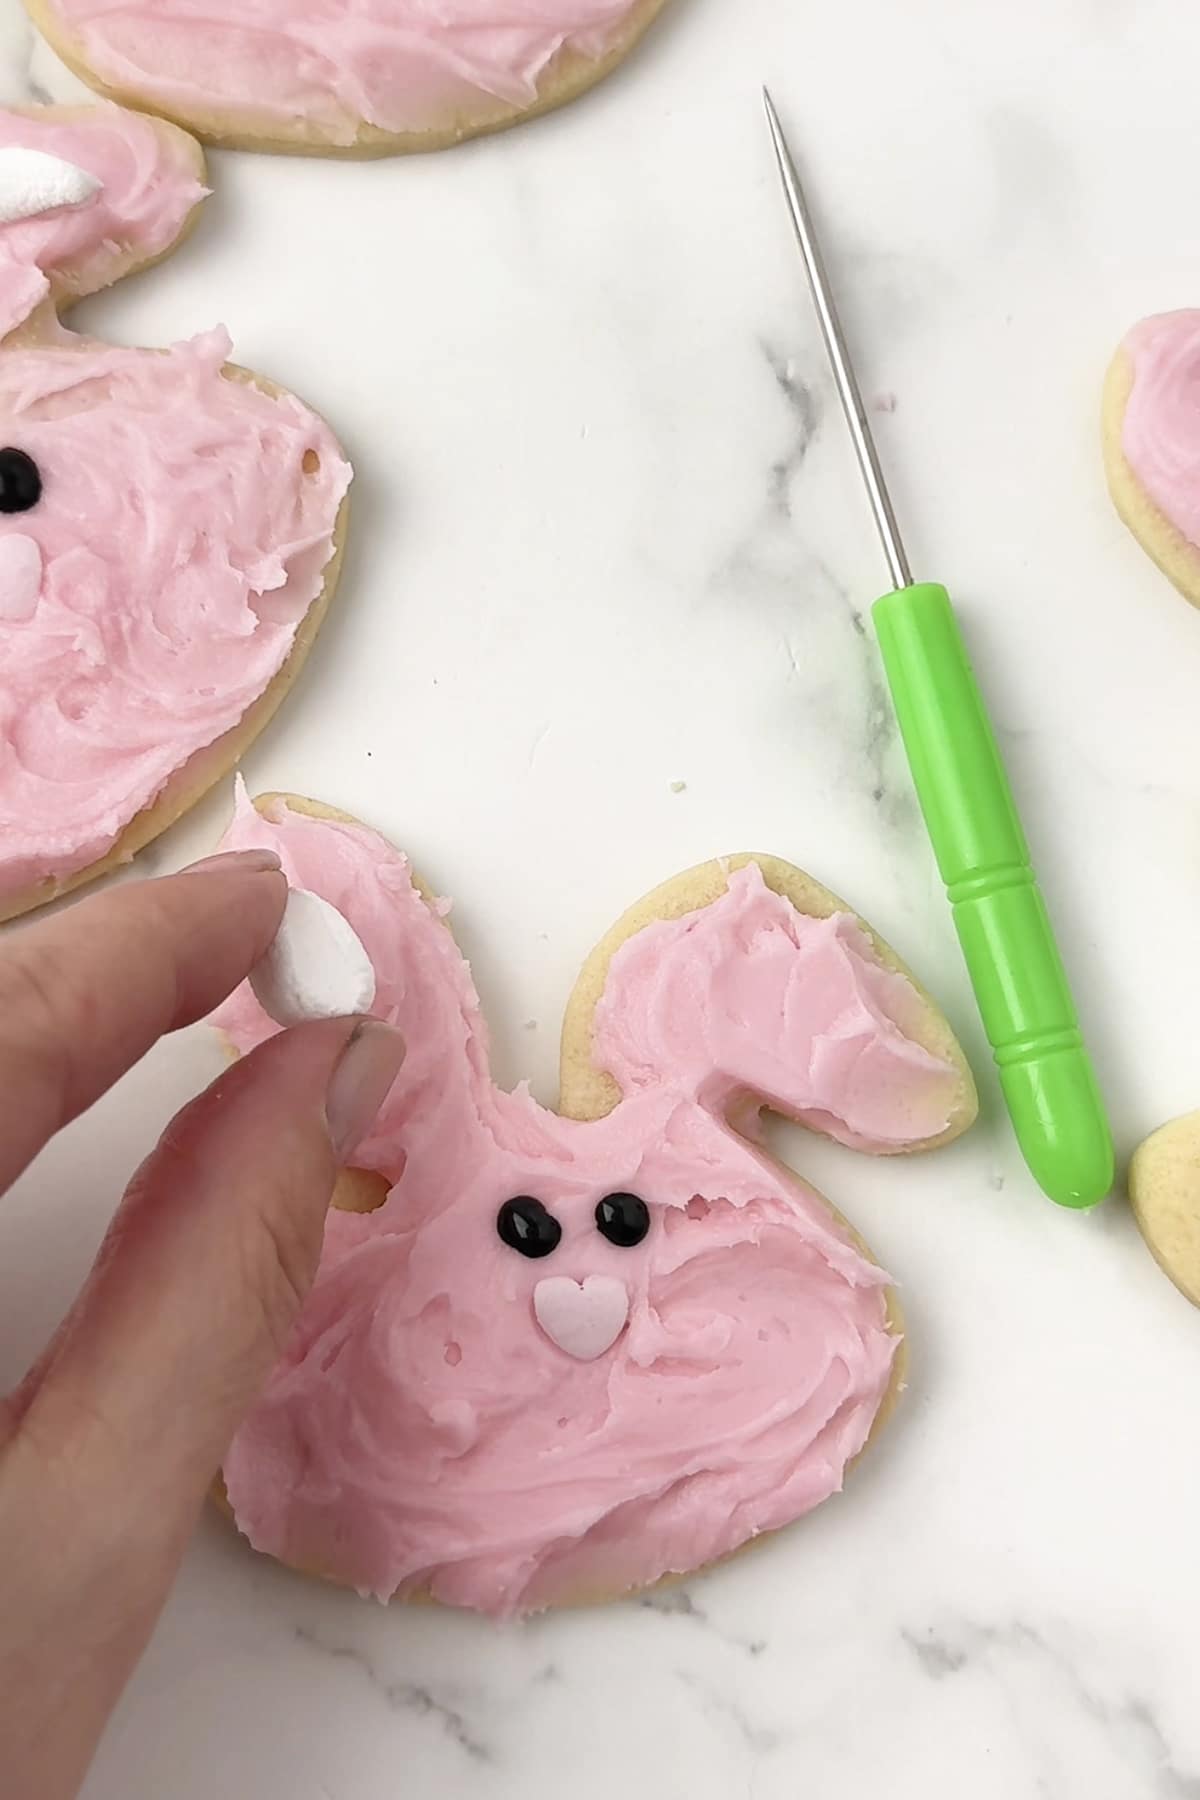 Decorating bunny ears of Easter sugar cookies